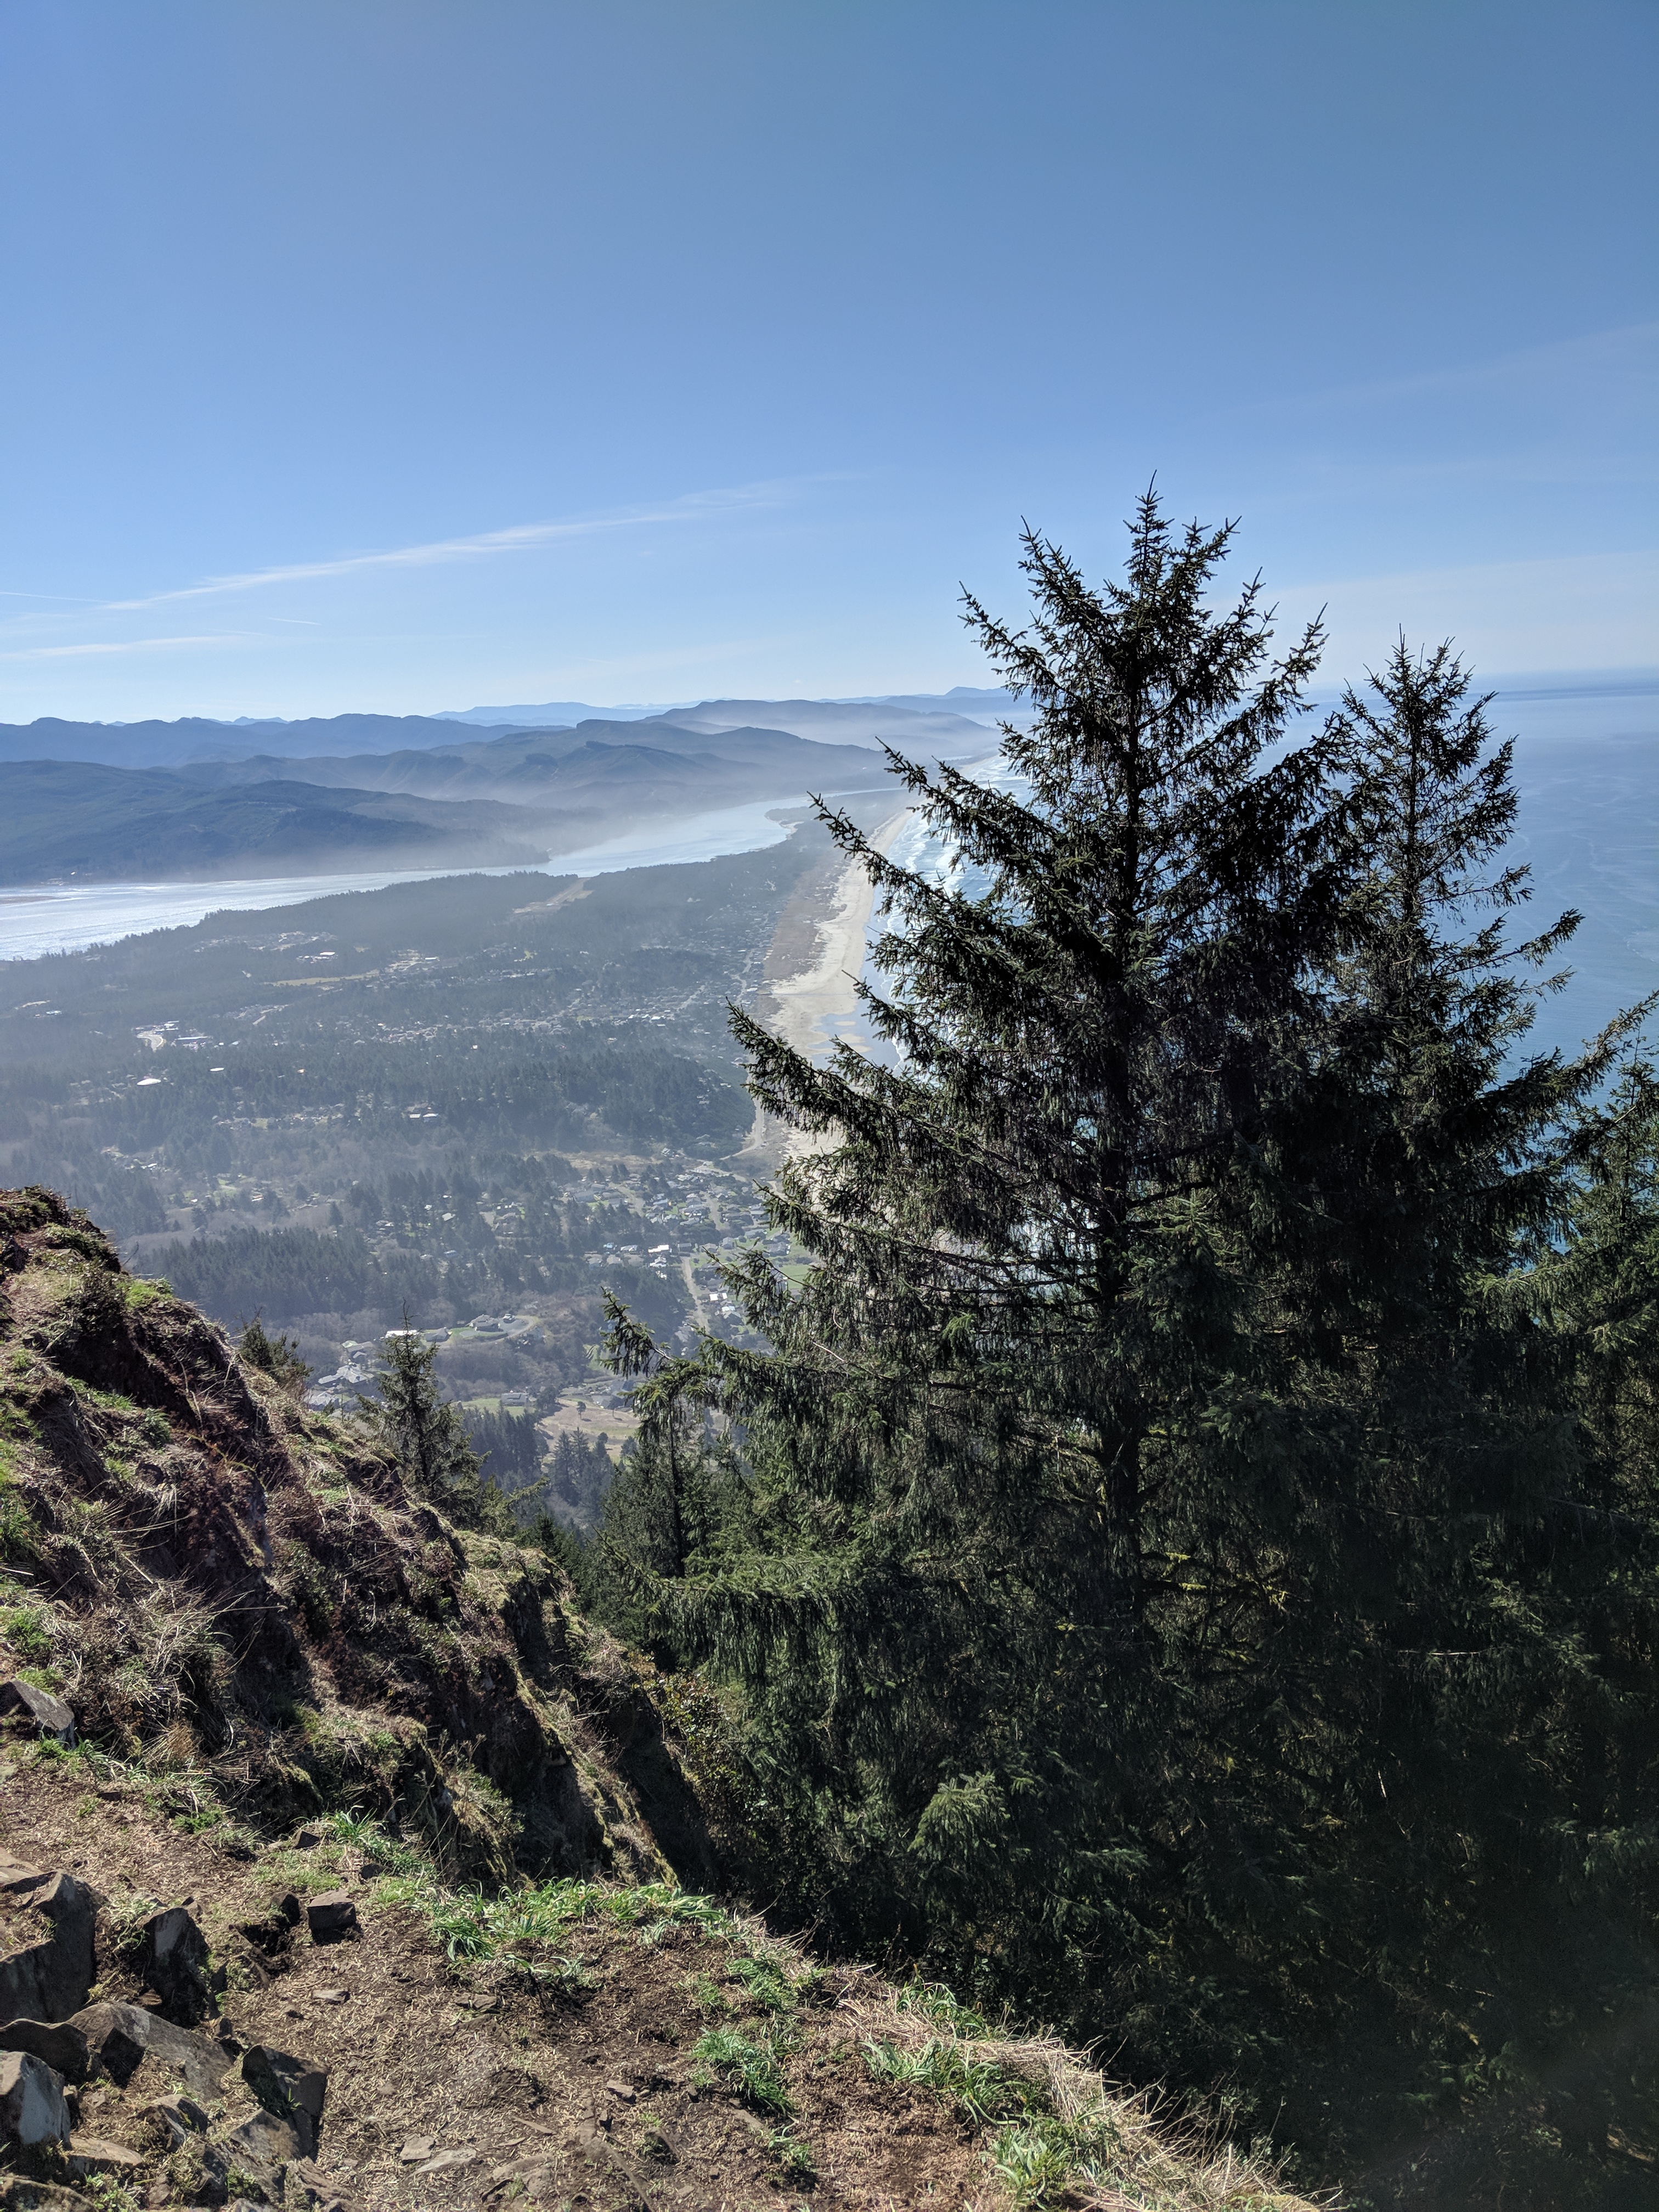 Headland overlooking the Oregon coast